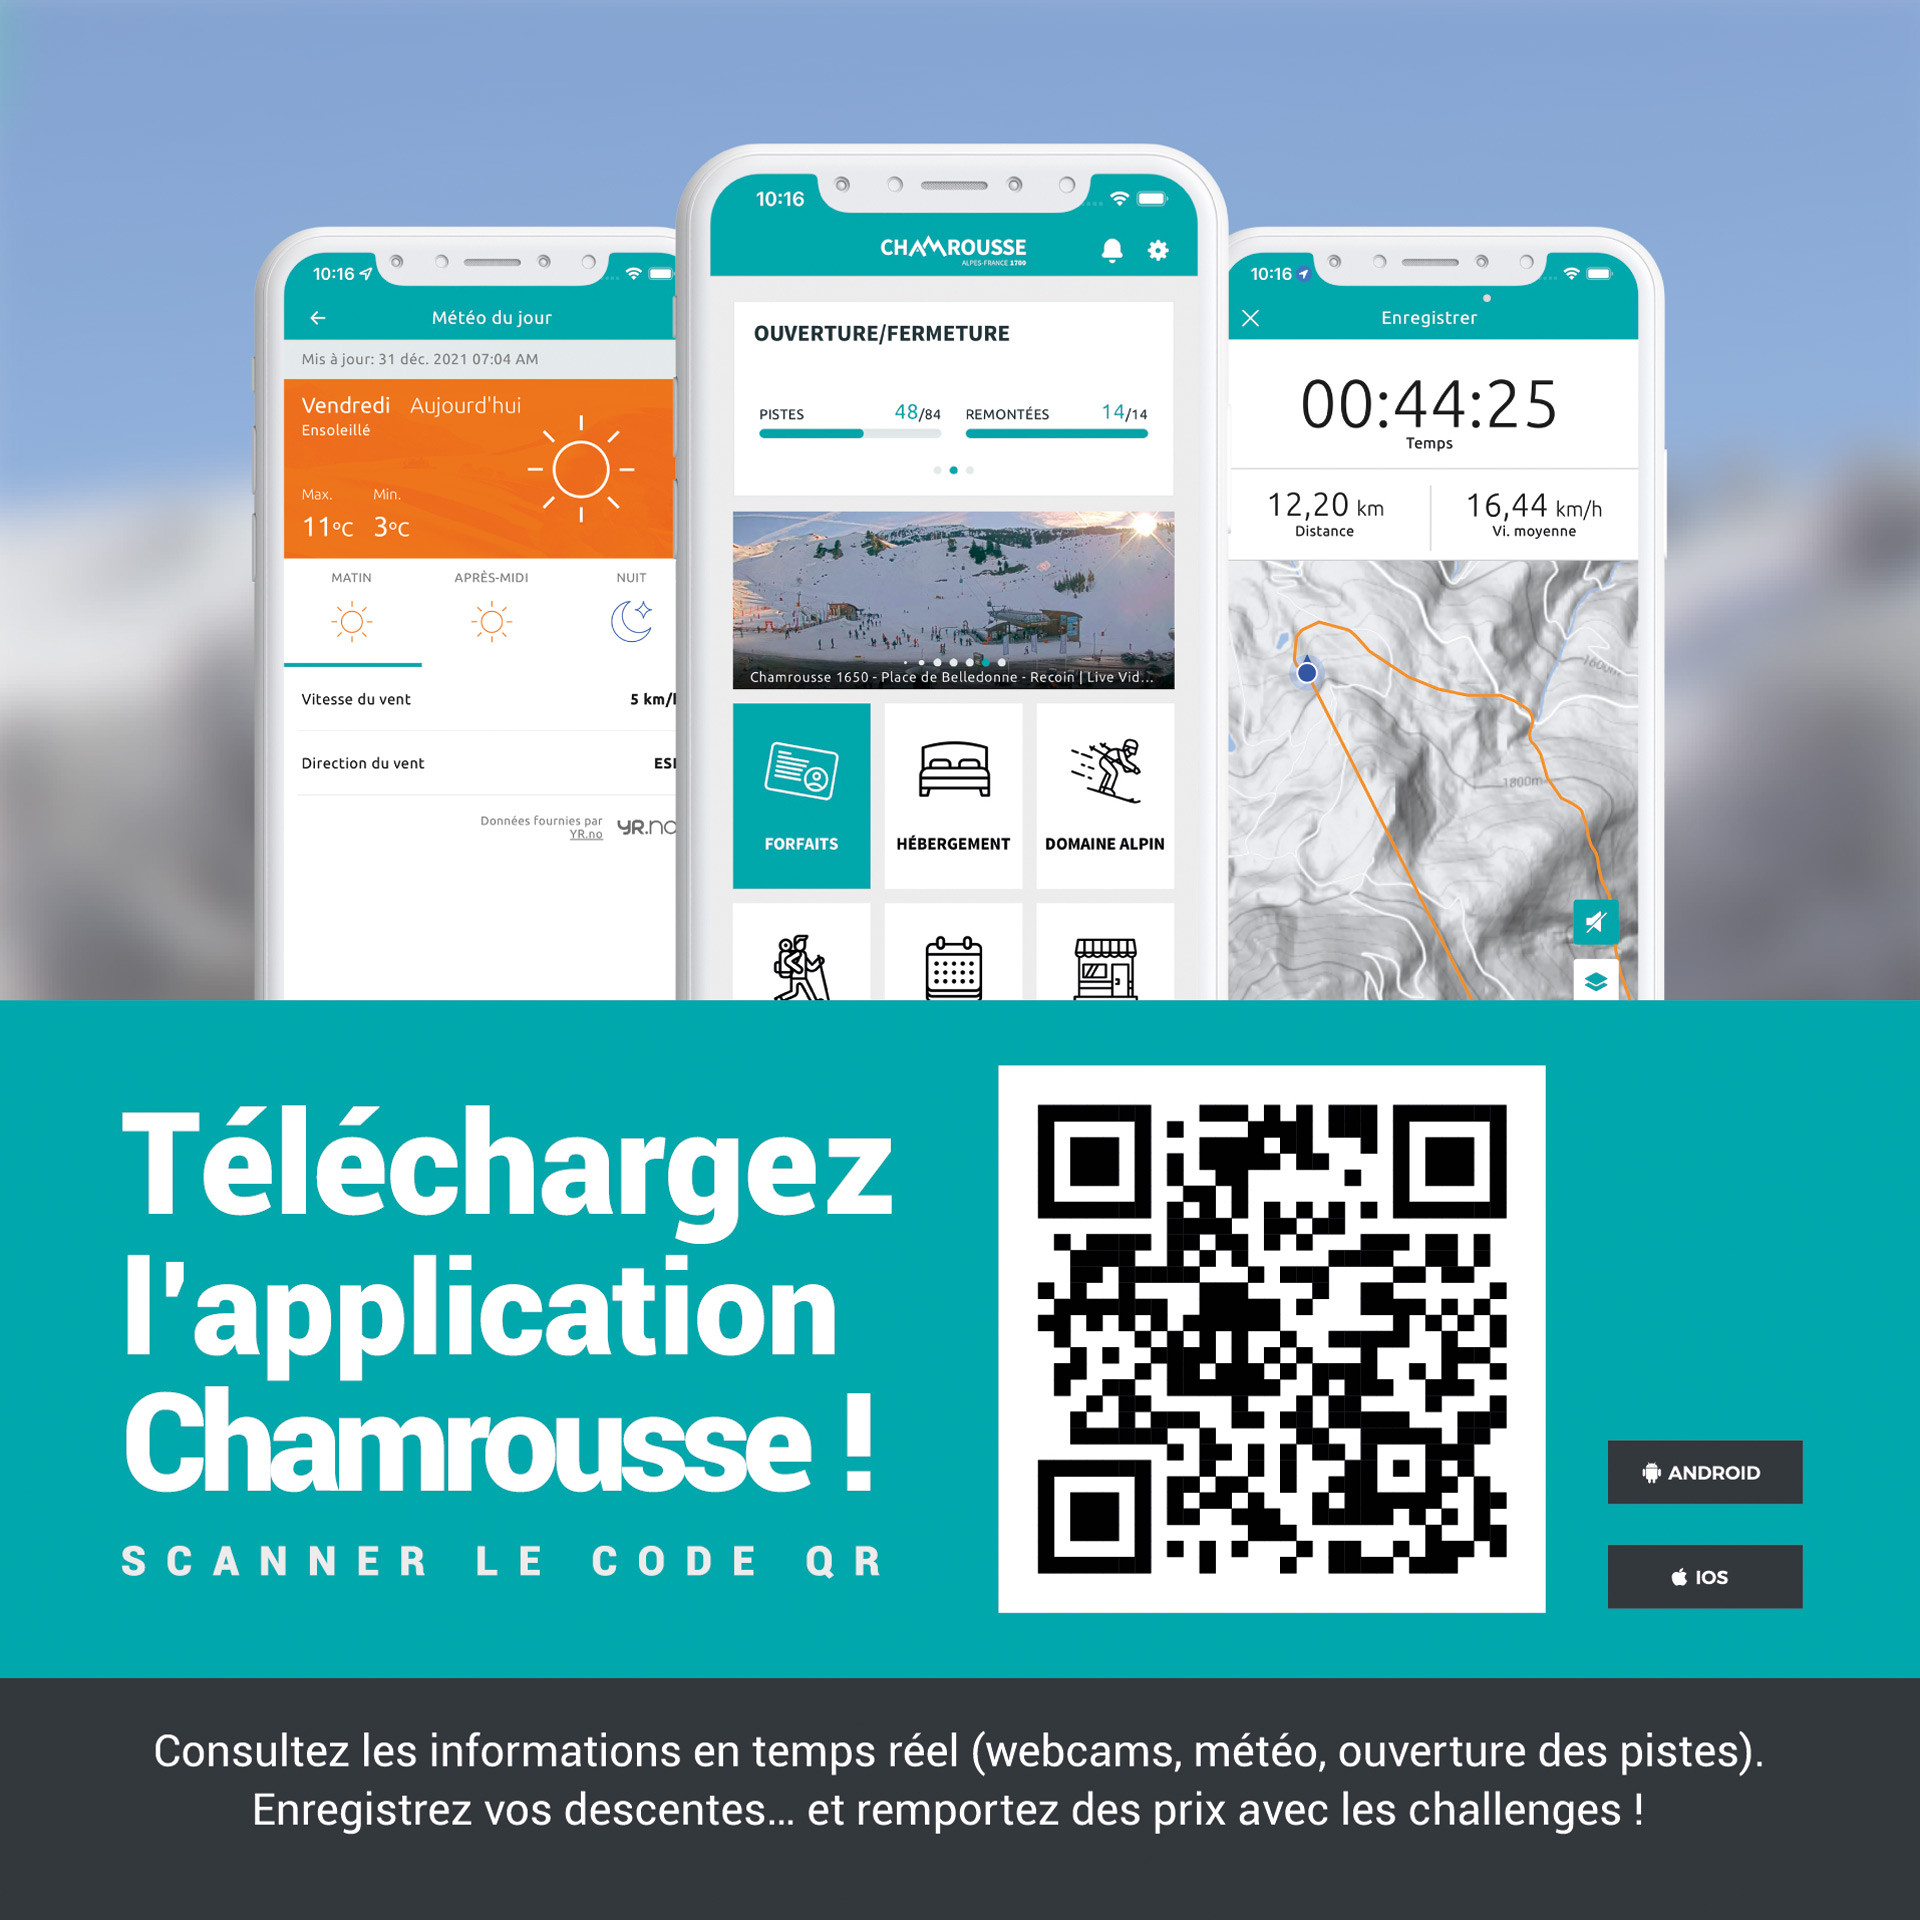 Chamrousse application mobile officielle station ski montagne grenoble isère alpes france